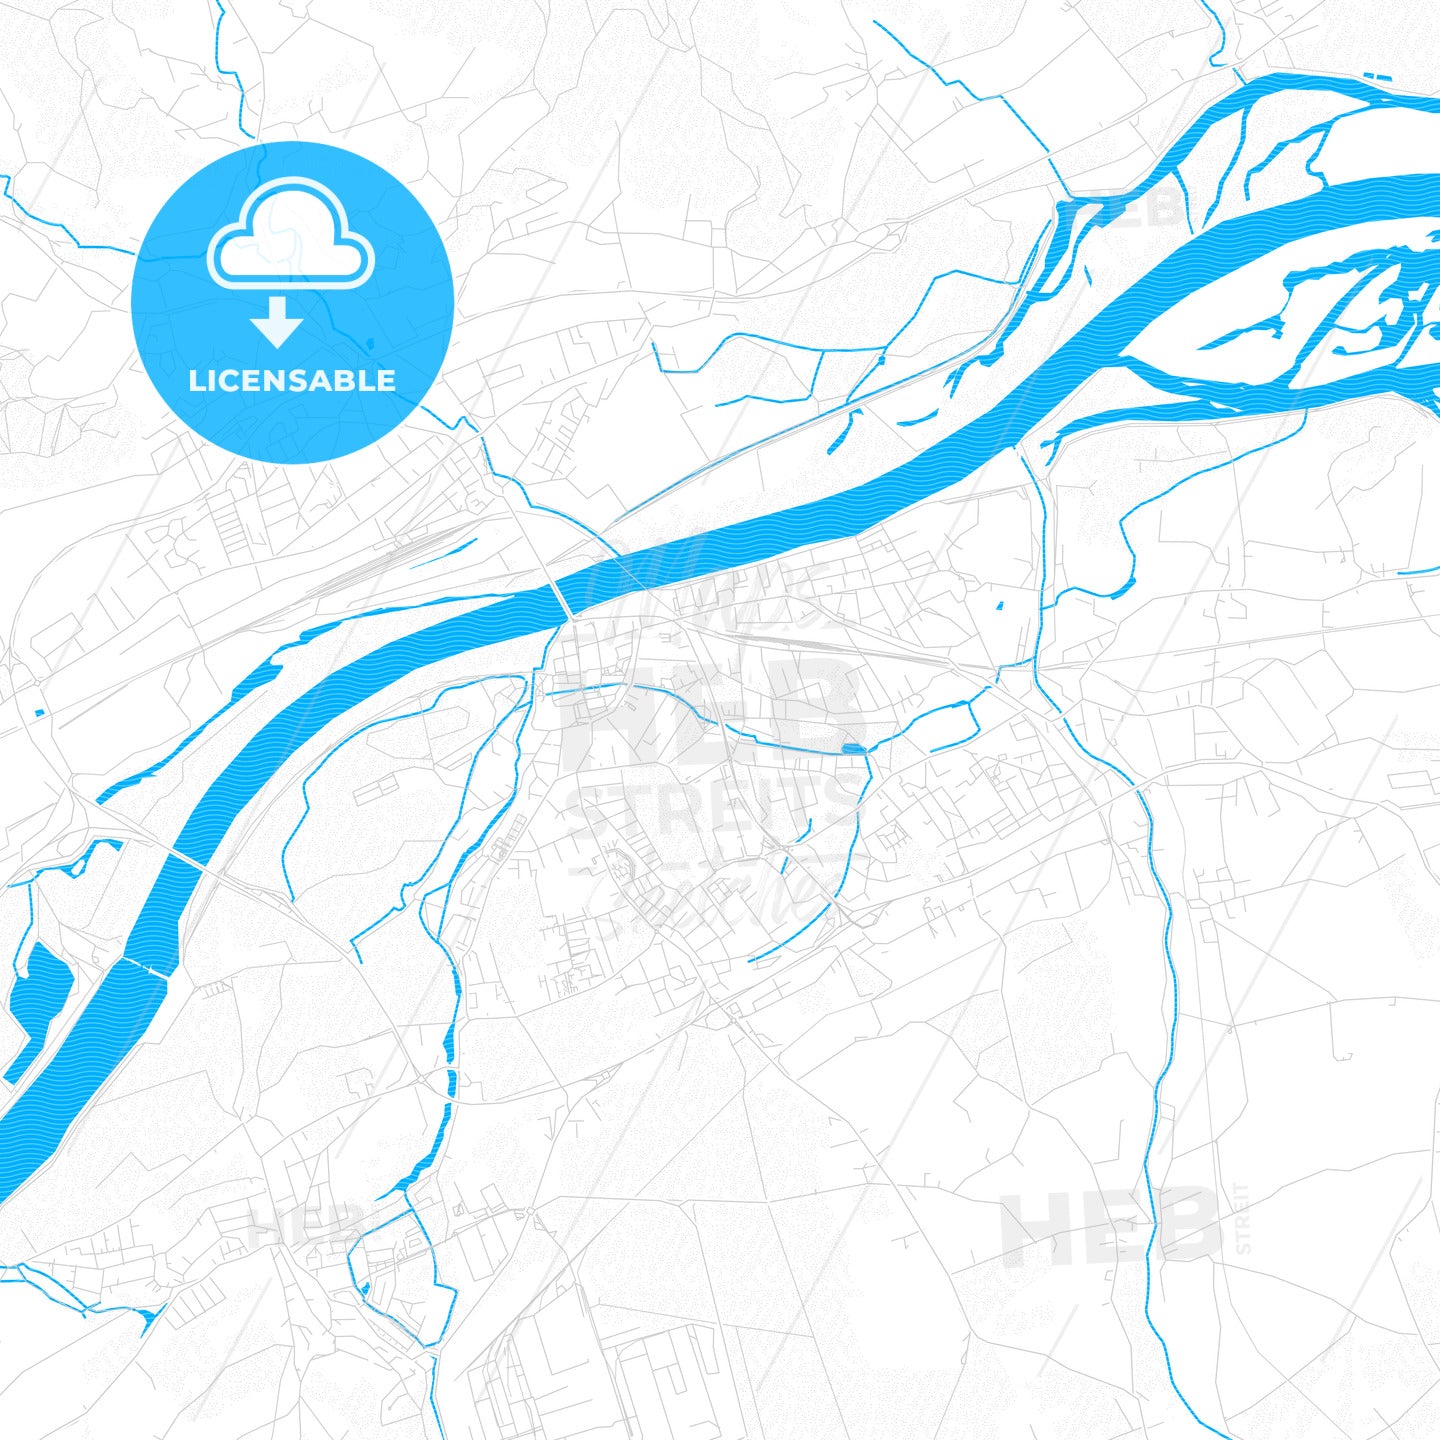 Braunau am Inn, Austria PDF vector map with water in focus